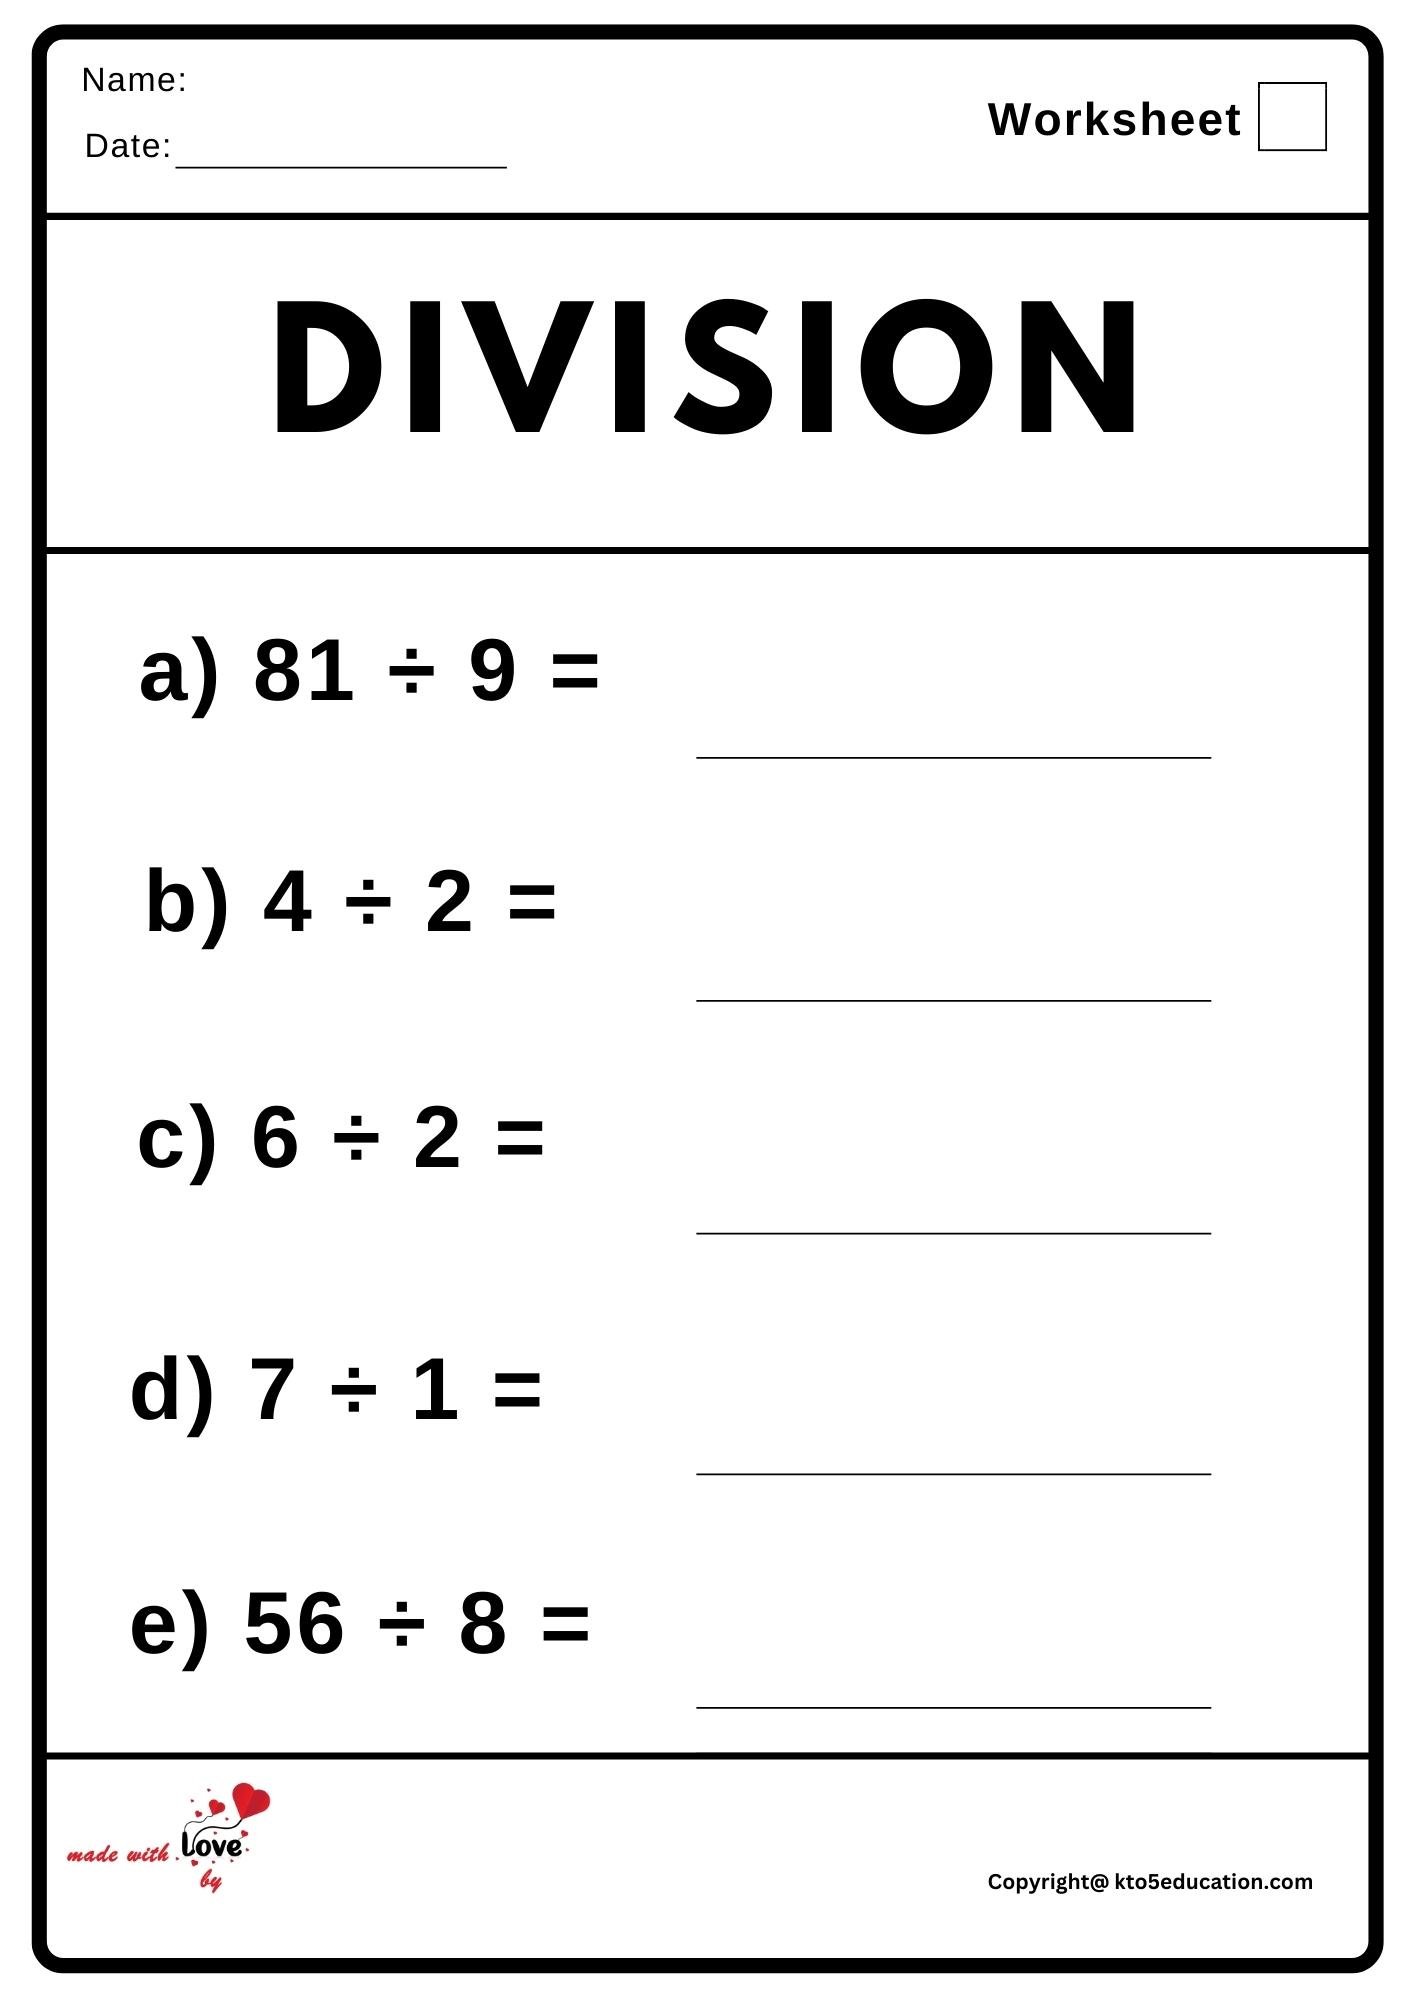 Division Worksheet